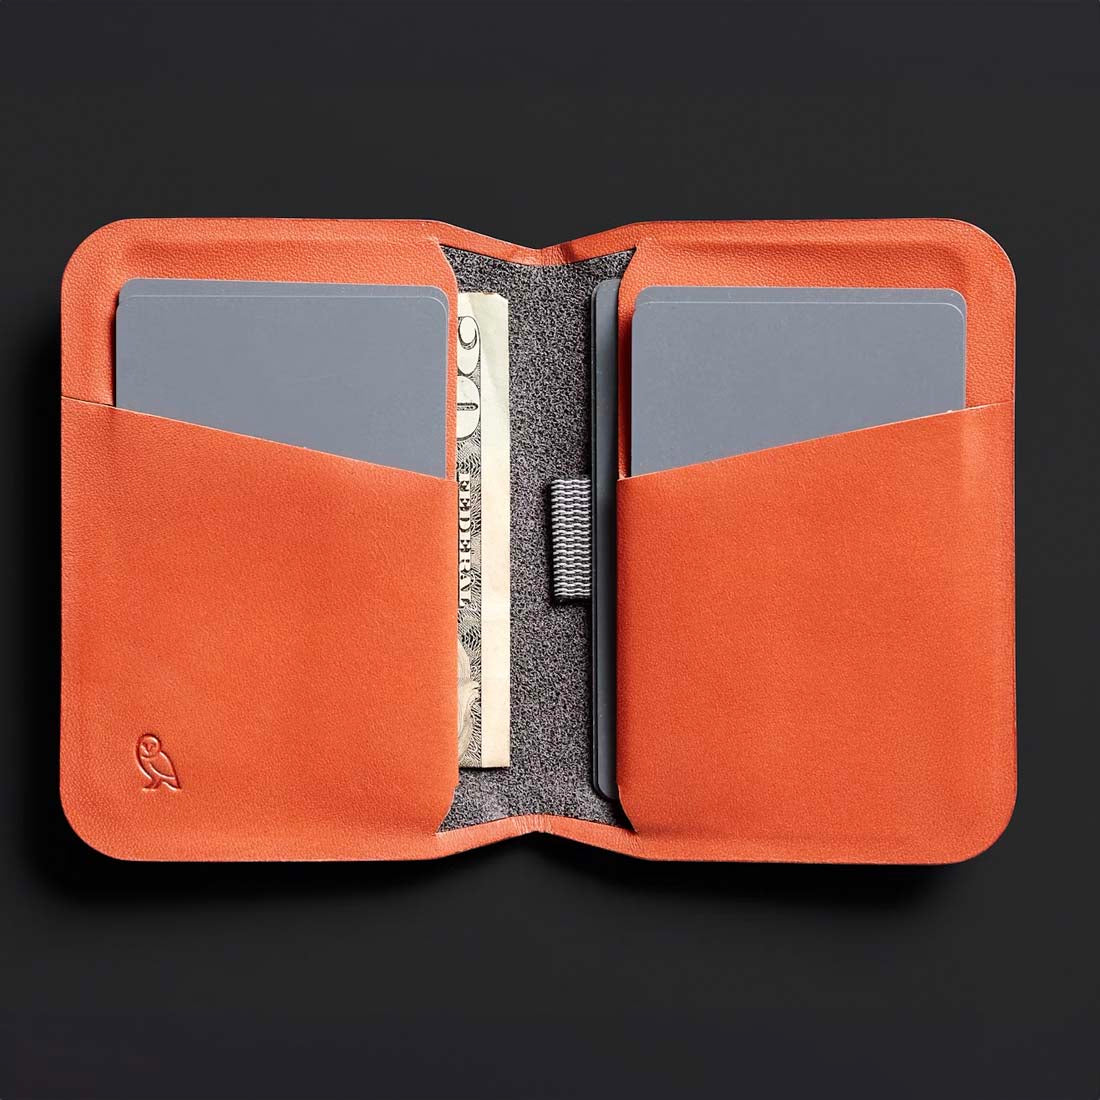 Indigo Apex Slim Sleeve Leather Wallet